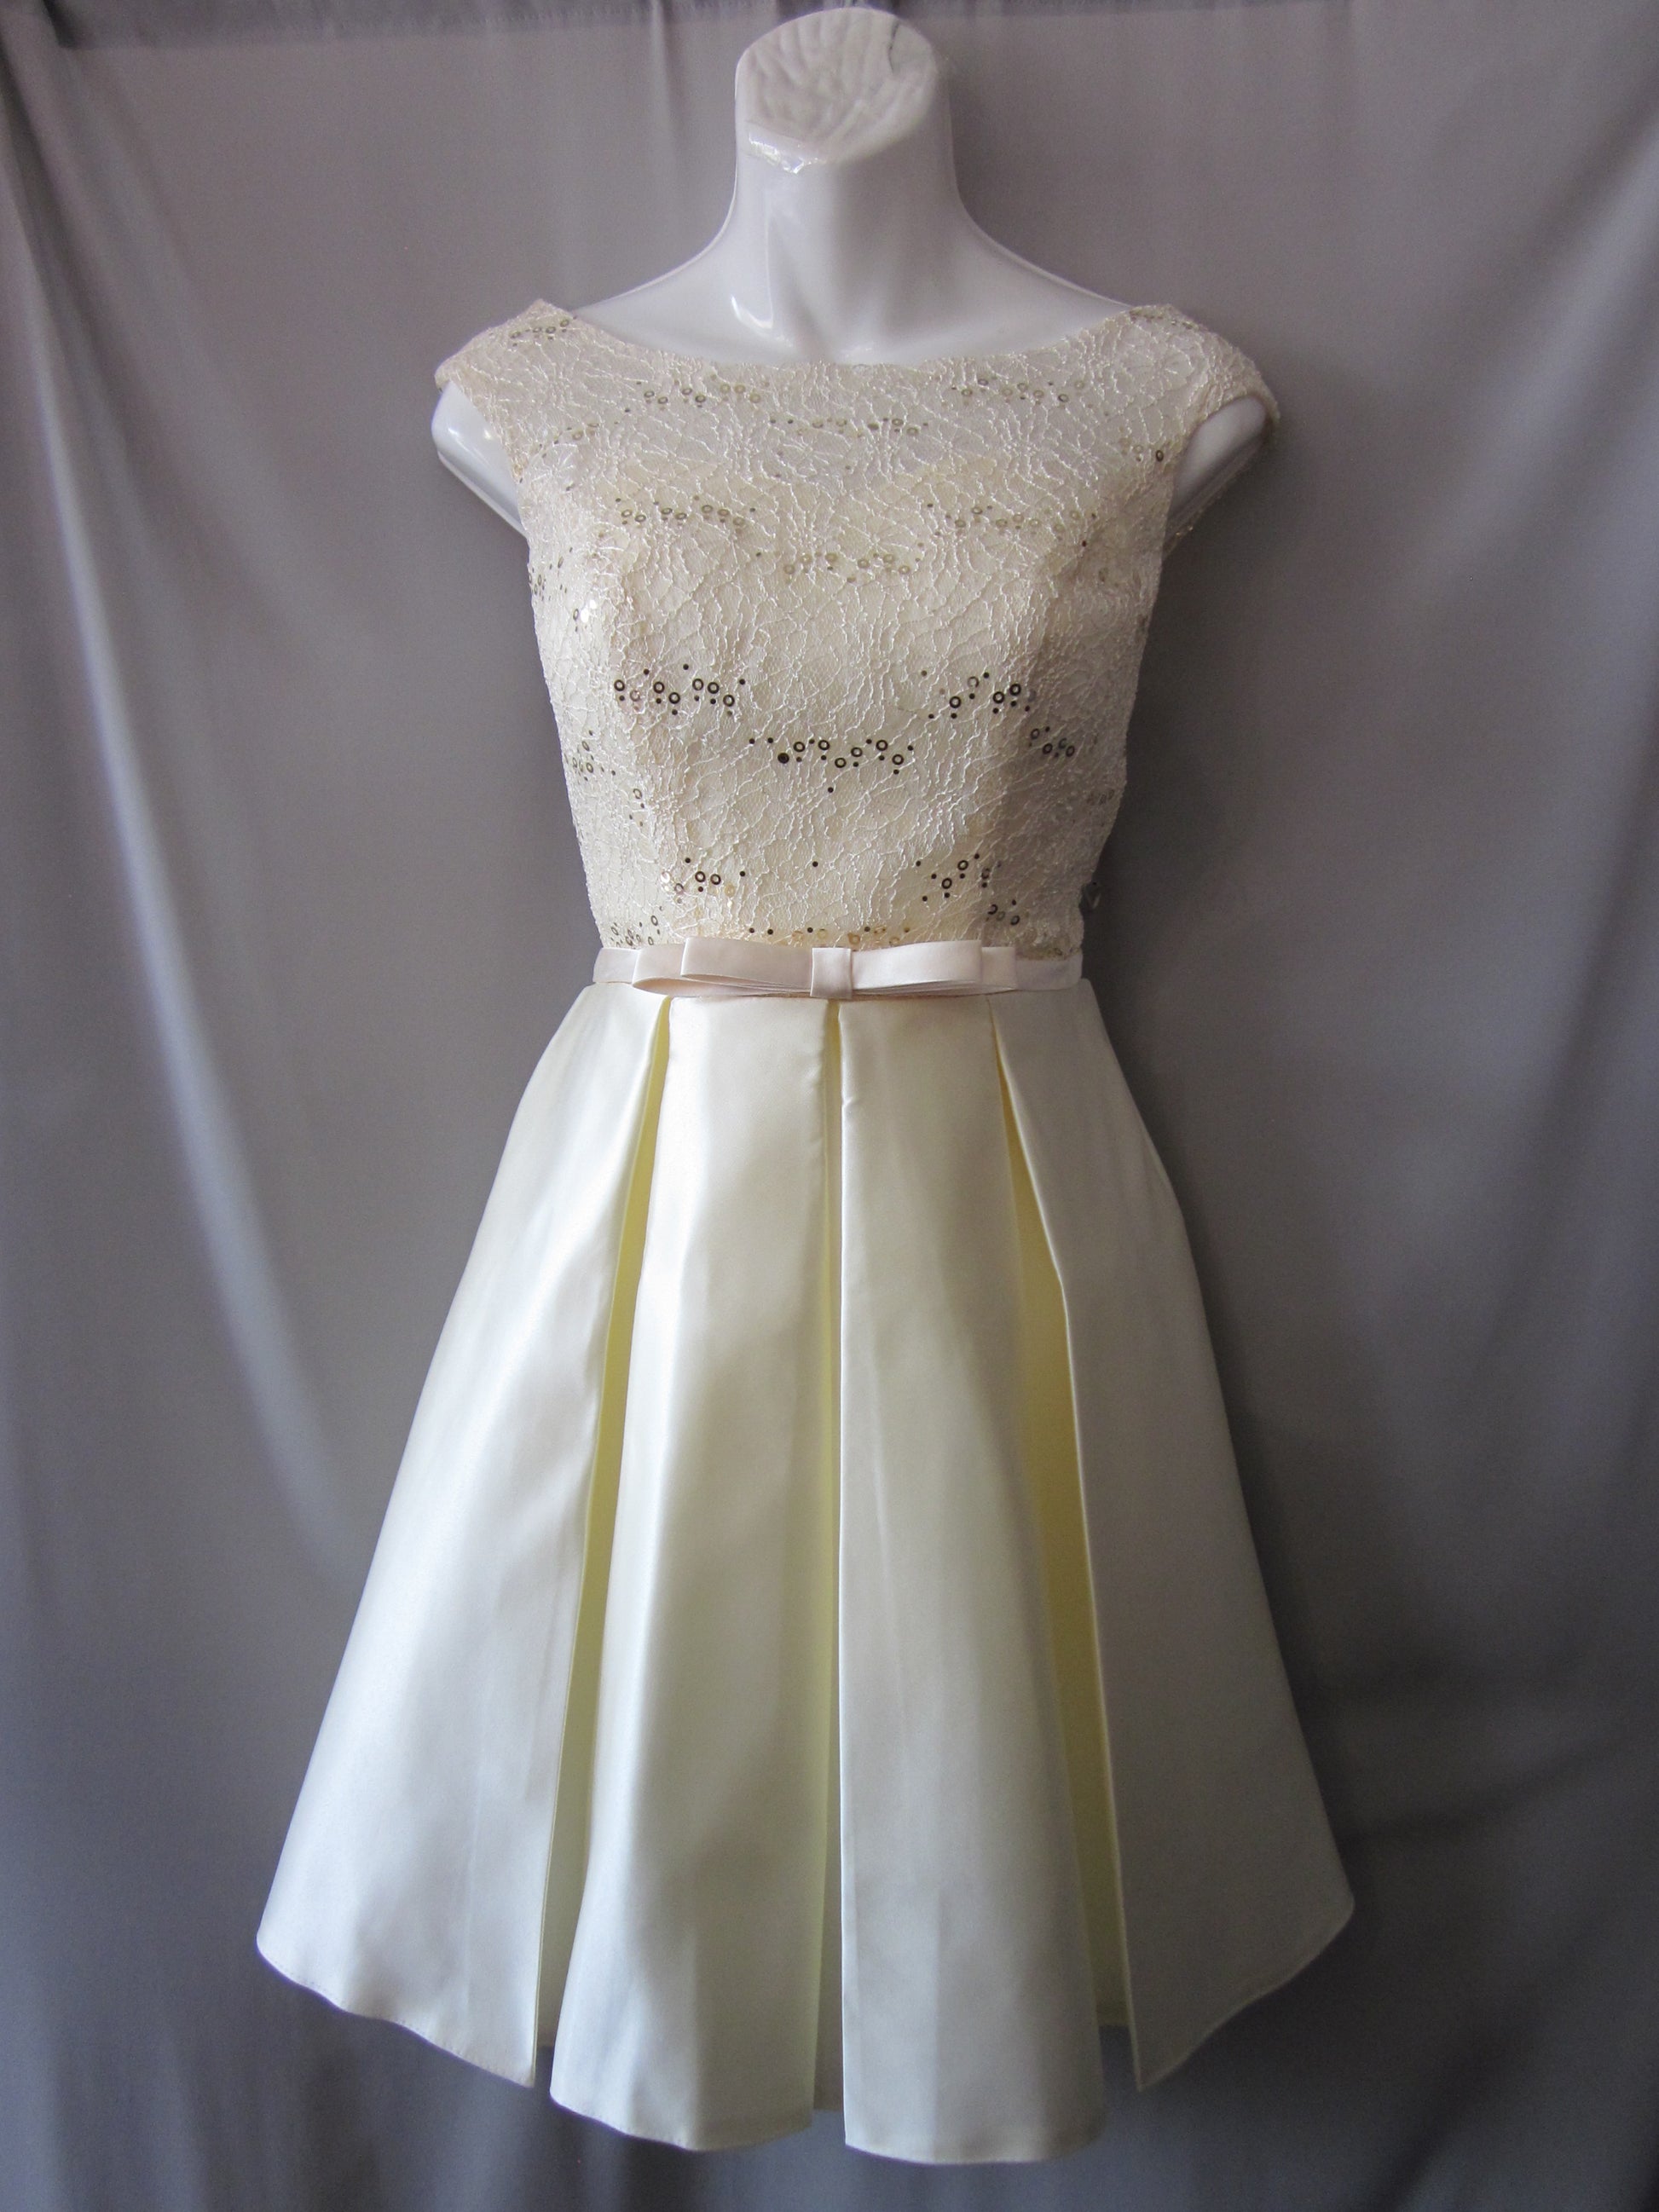 Short Prom/Grad Dress Size 2XL Style 4224 - MISS LESTER'S 